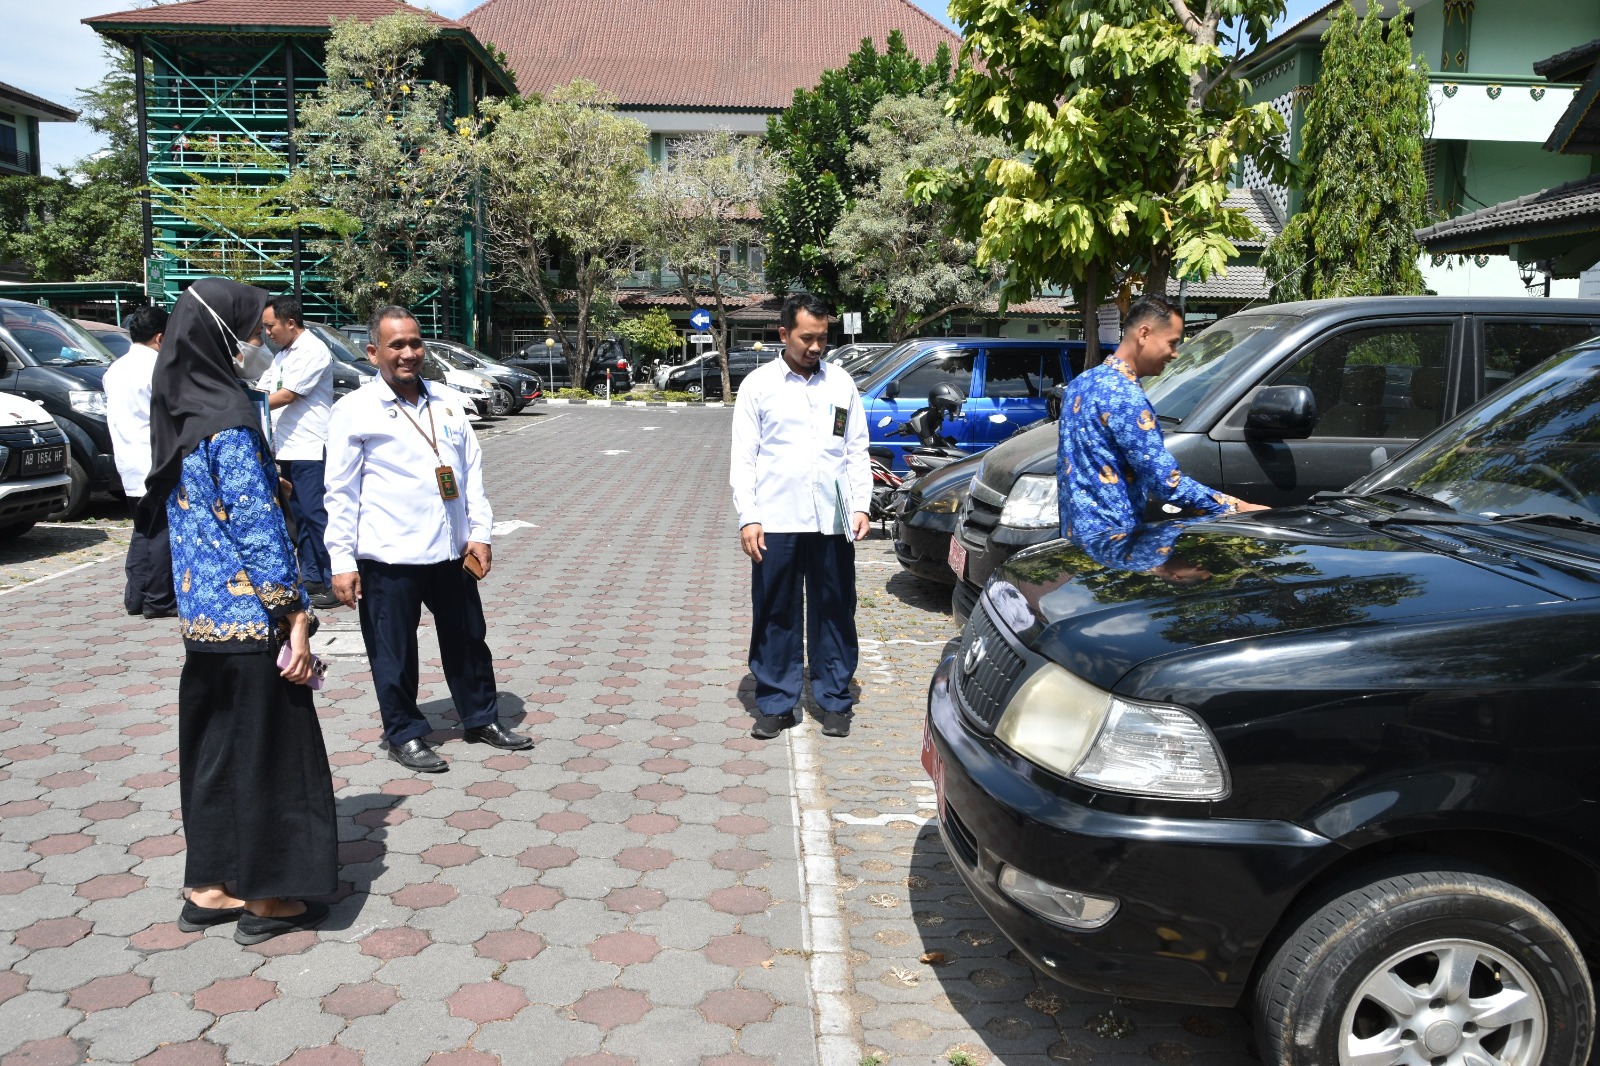 Pengadilan Negeri Yogyakarta Melakukan Koordinasi Aset Daerah dengan Pemerintah Kota Yogyakarta